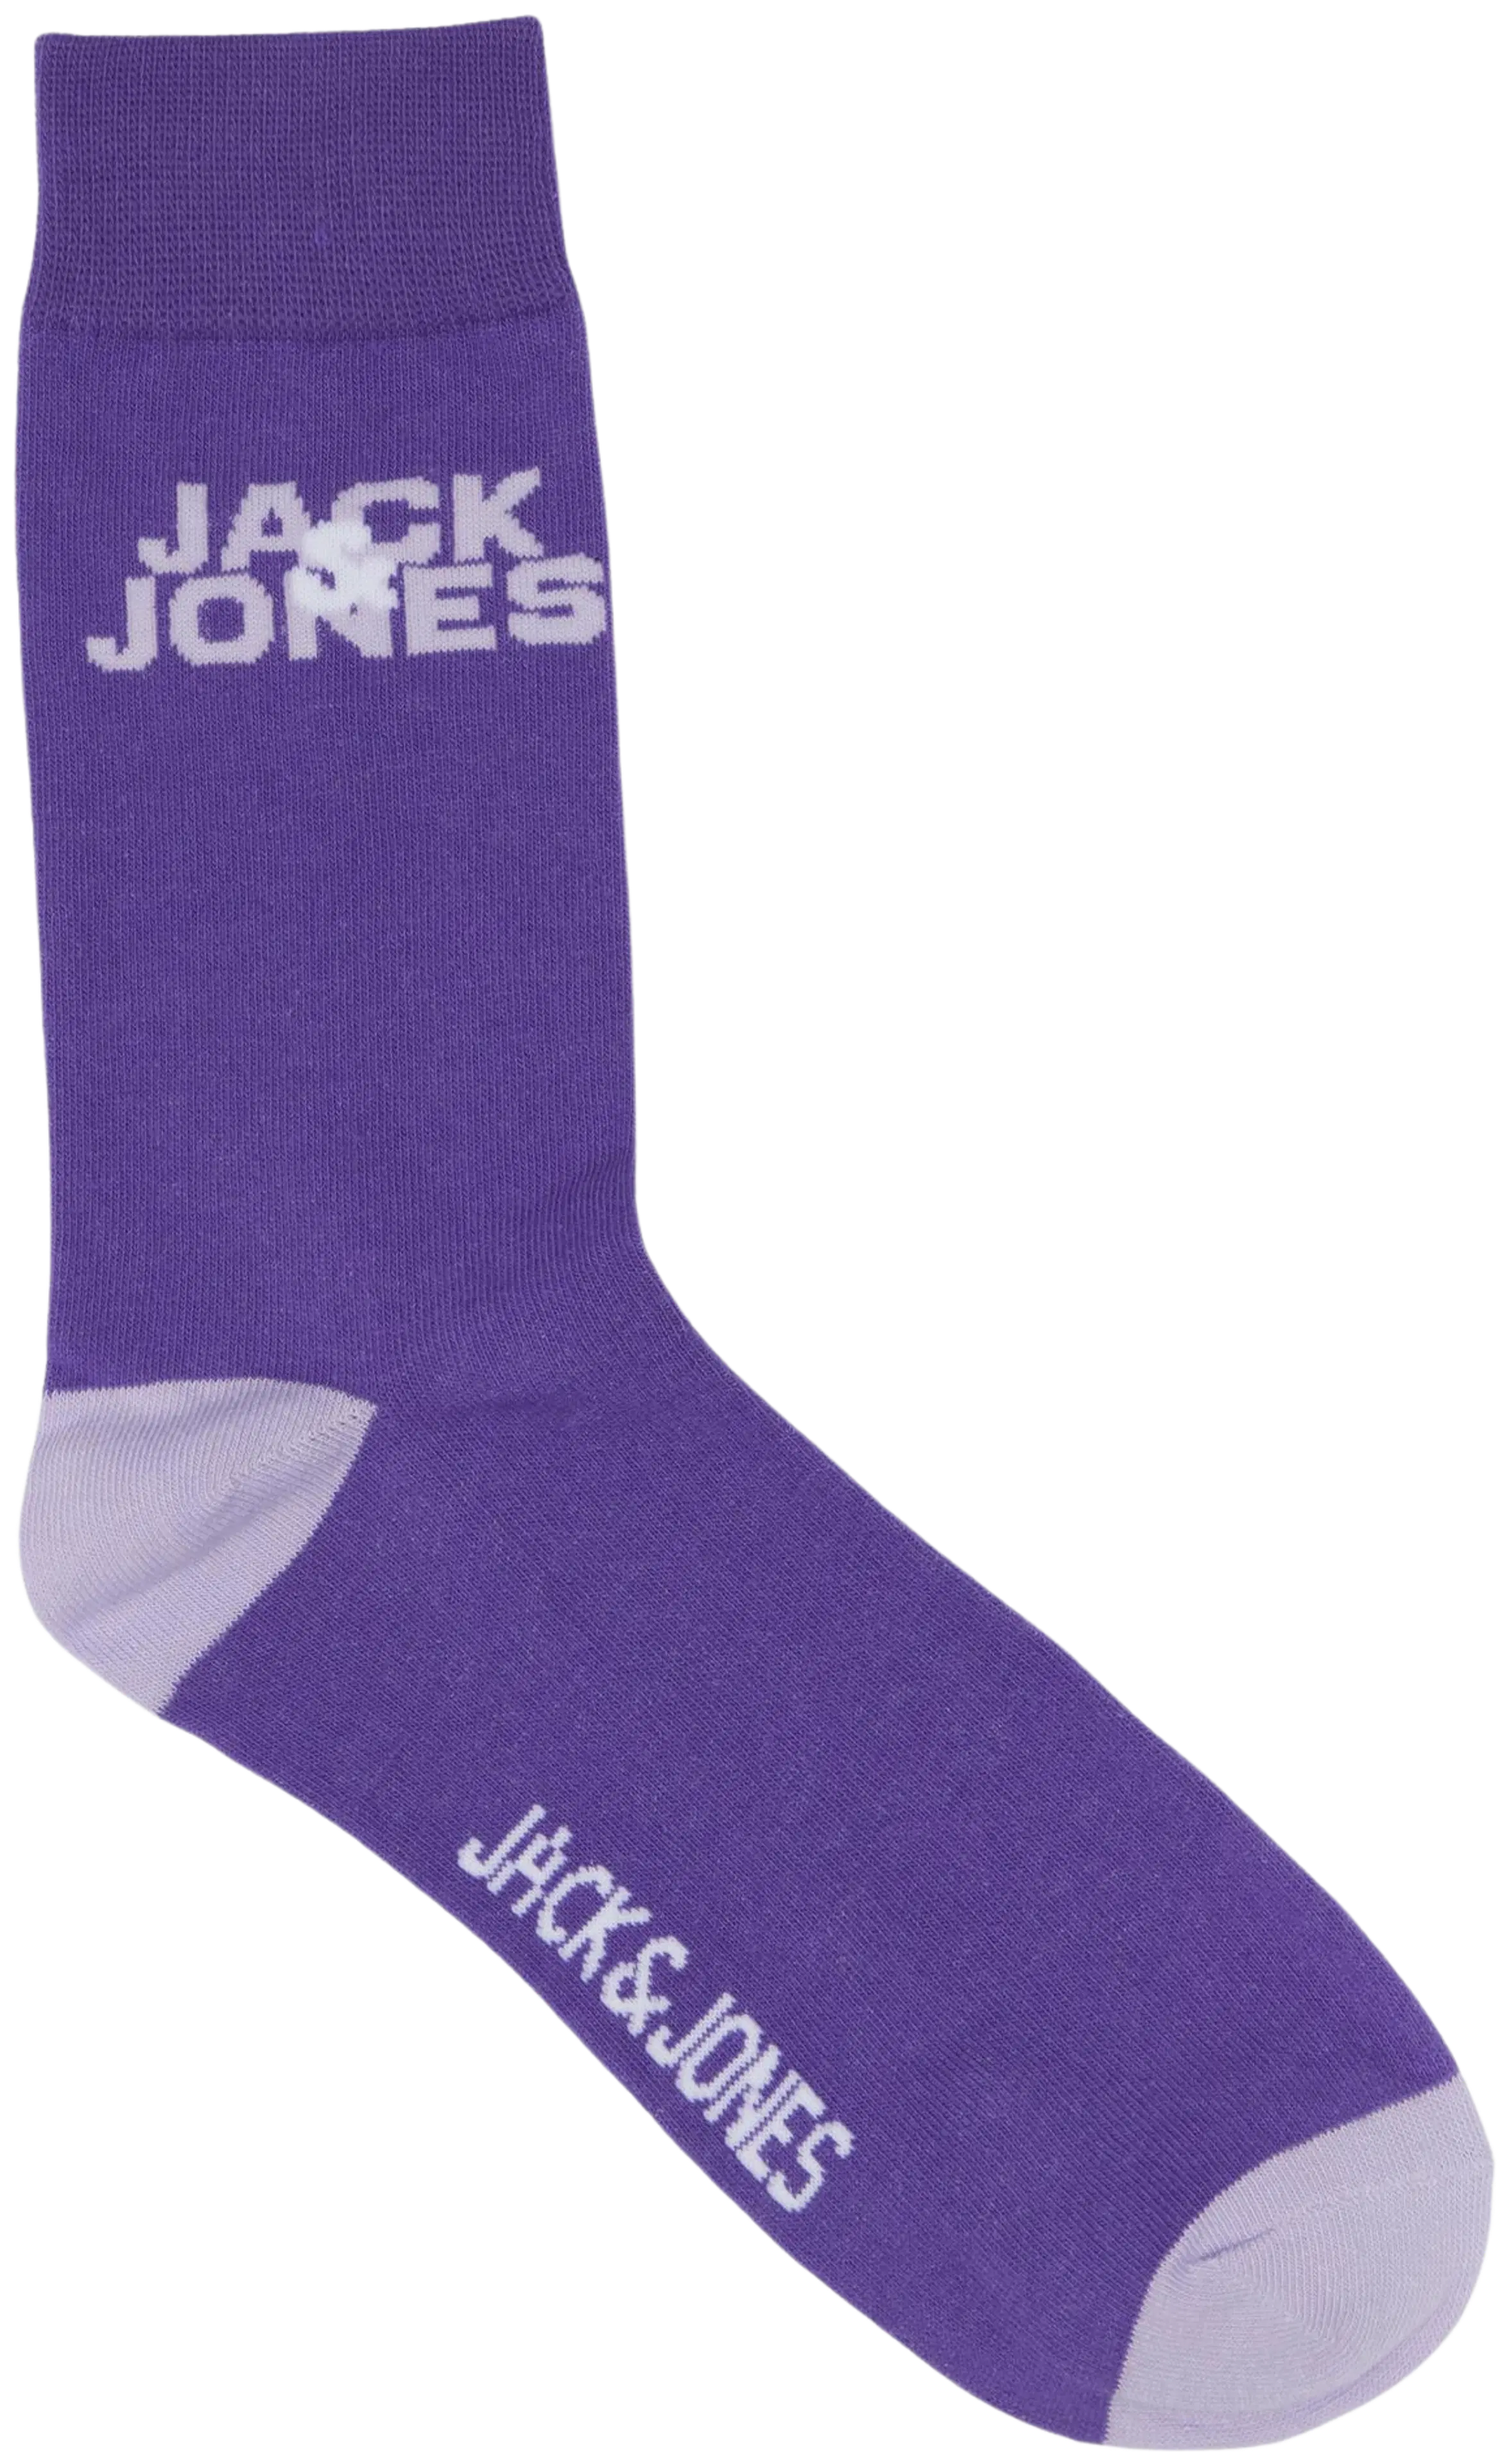 Jack&Jones Jackonga logo 5-pack sukat